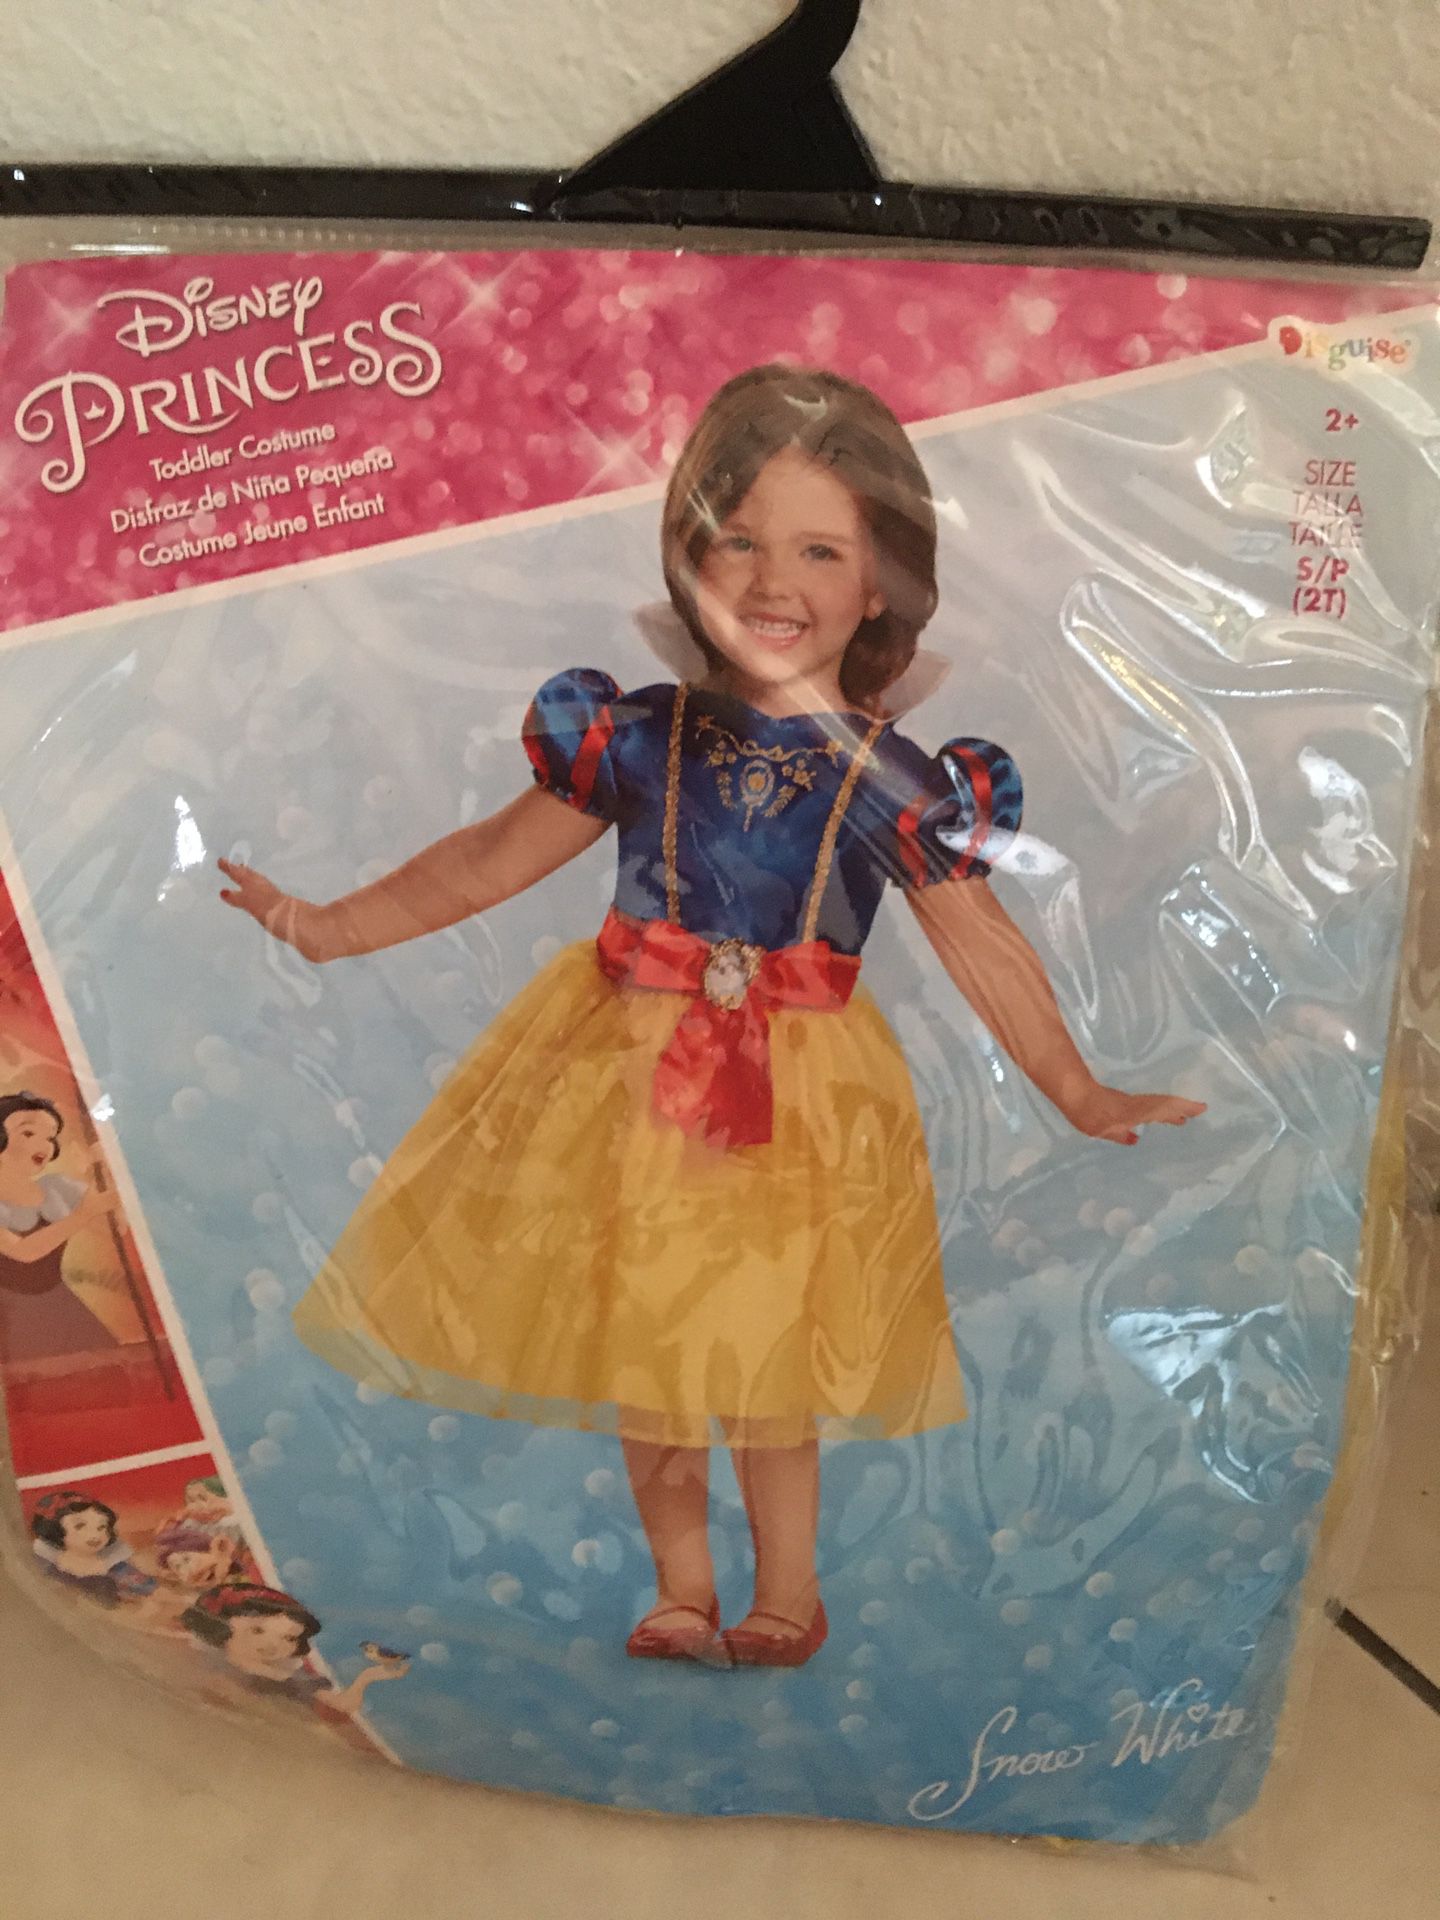 Snow White costume